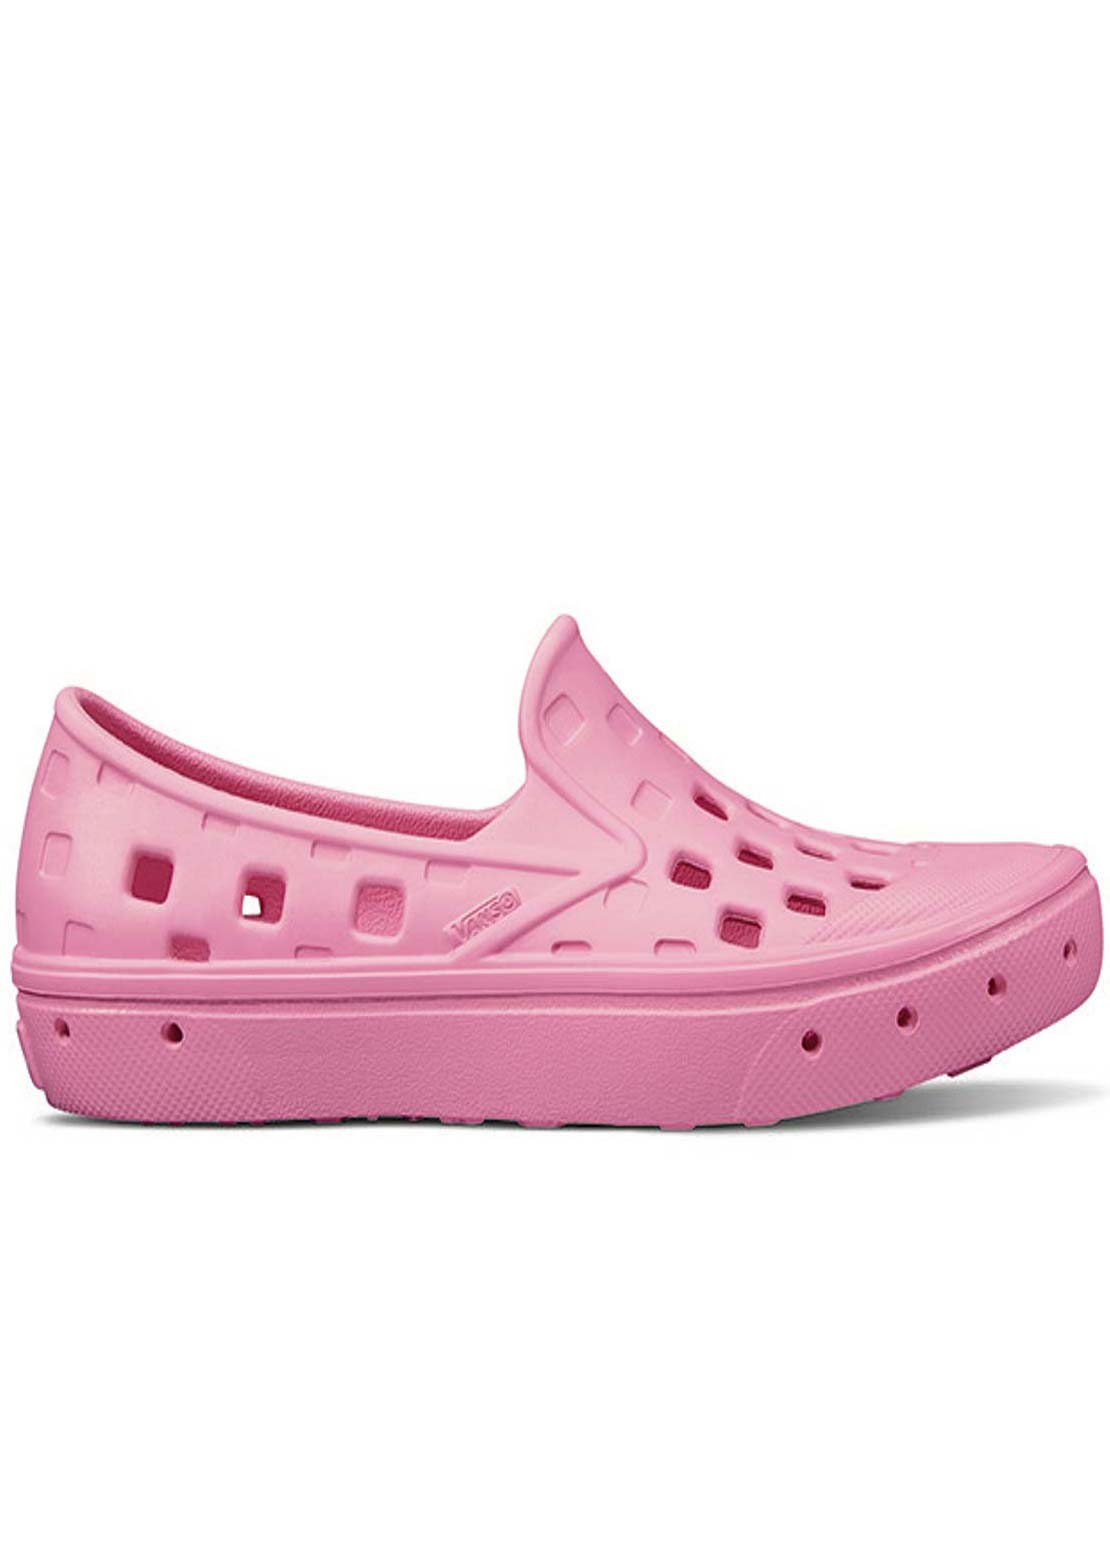 Vans Toddler Slip-On Trek Shoes Begonia